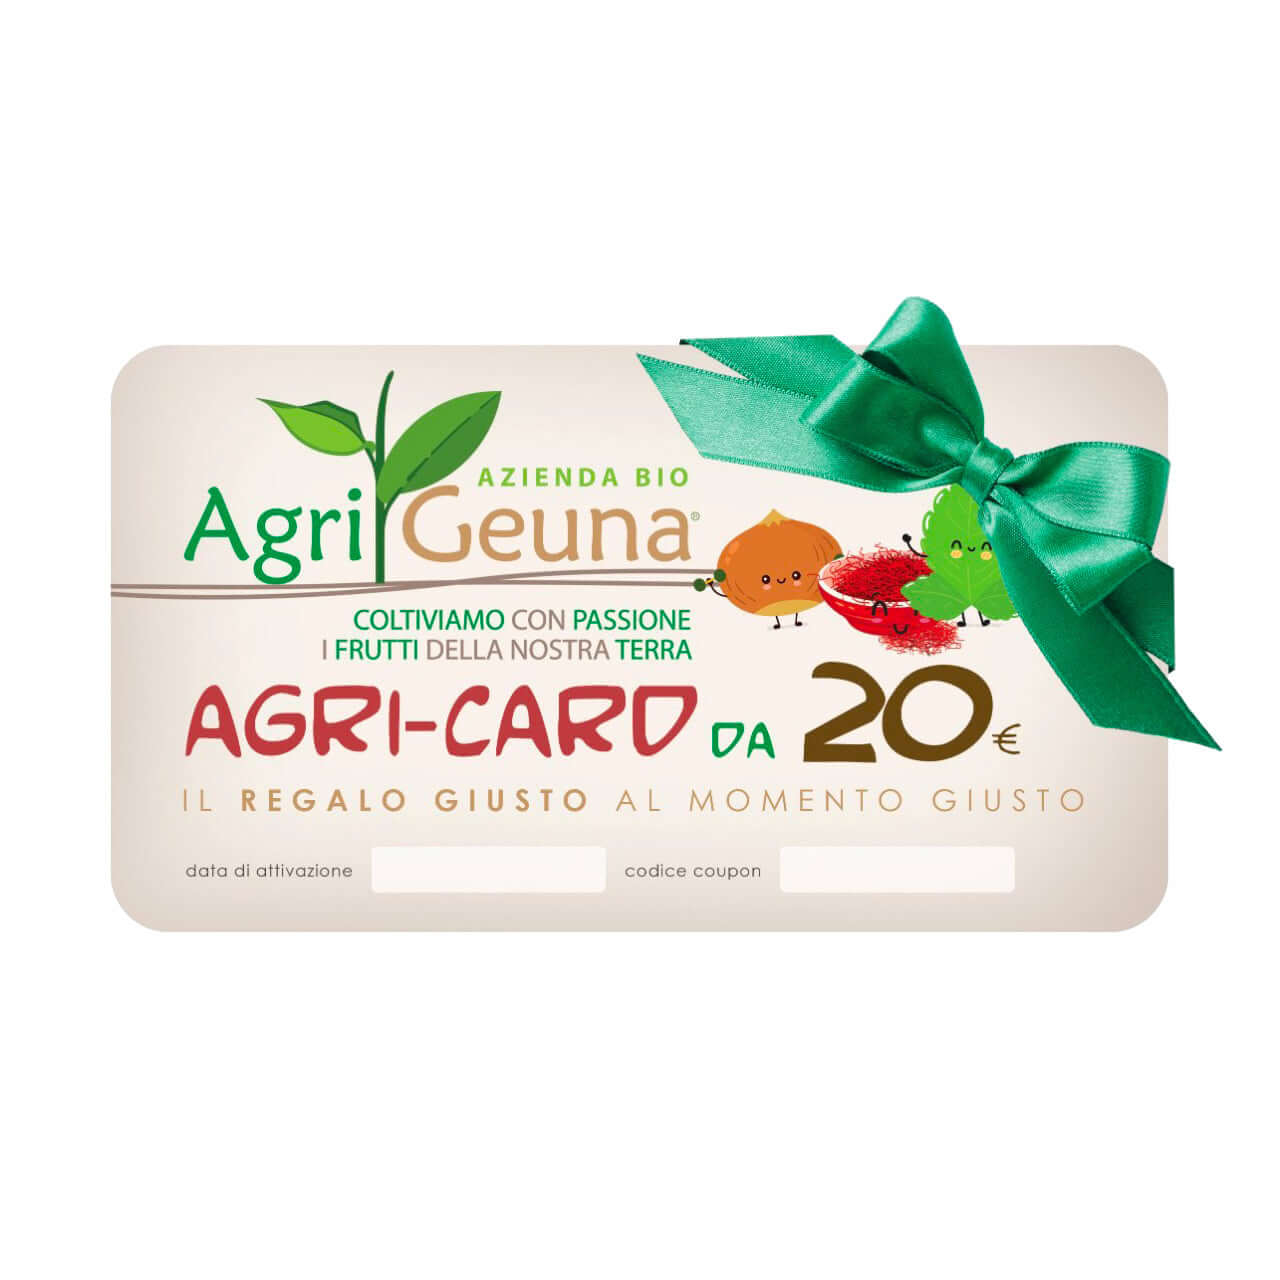 Agri-Card - Il regalo giusto al momento giusto